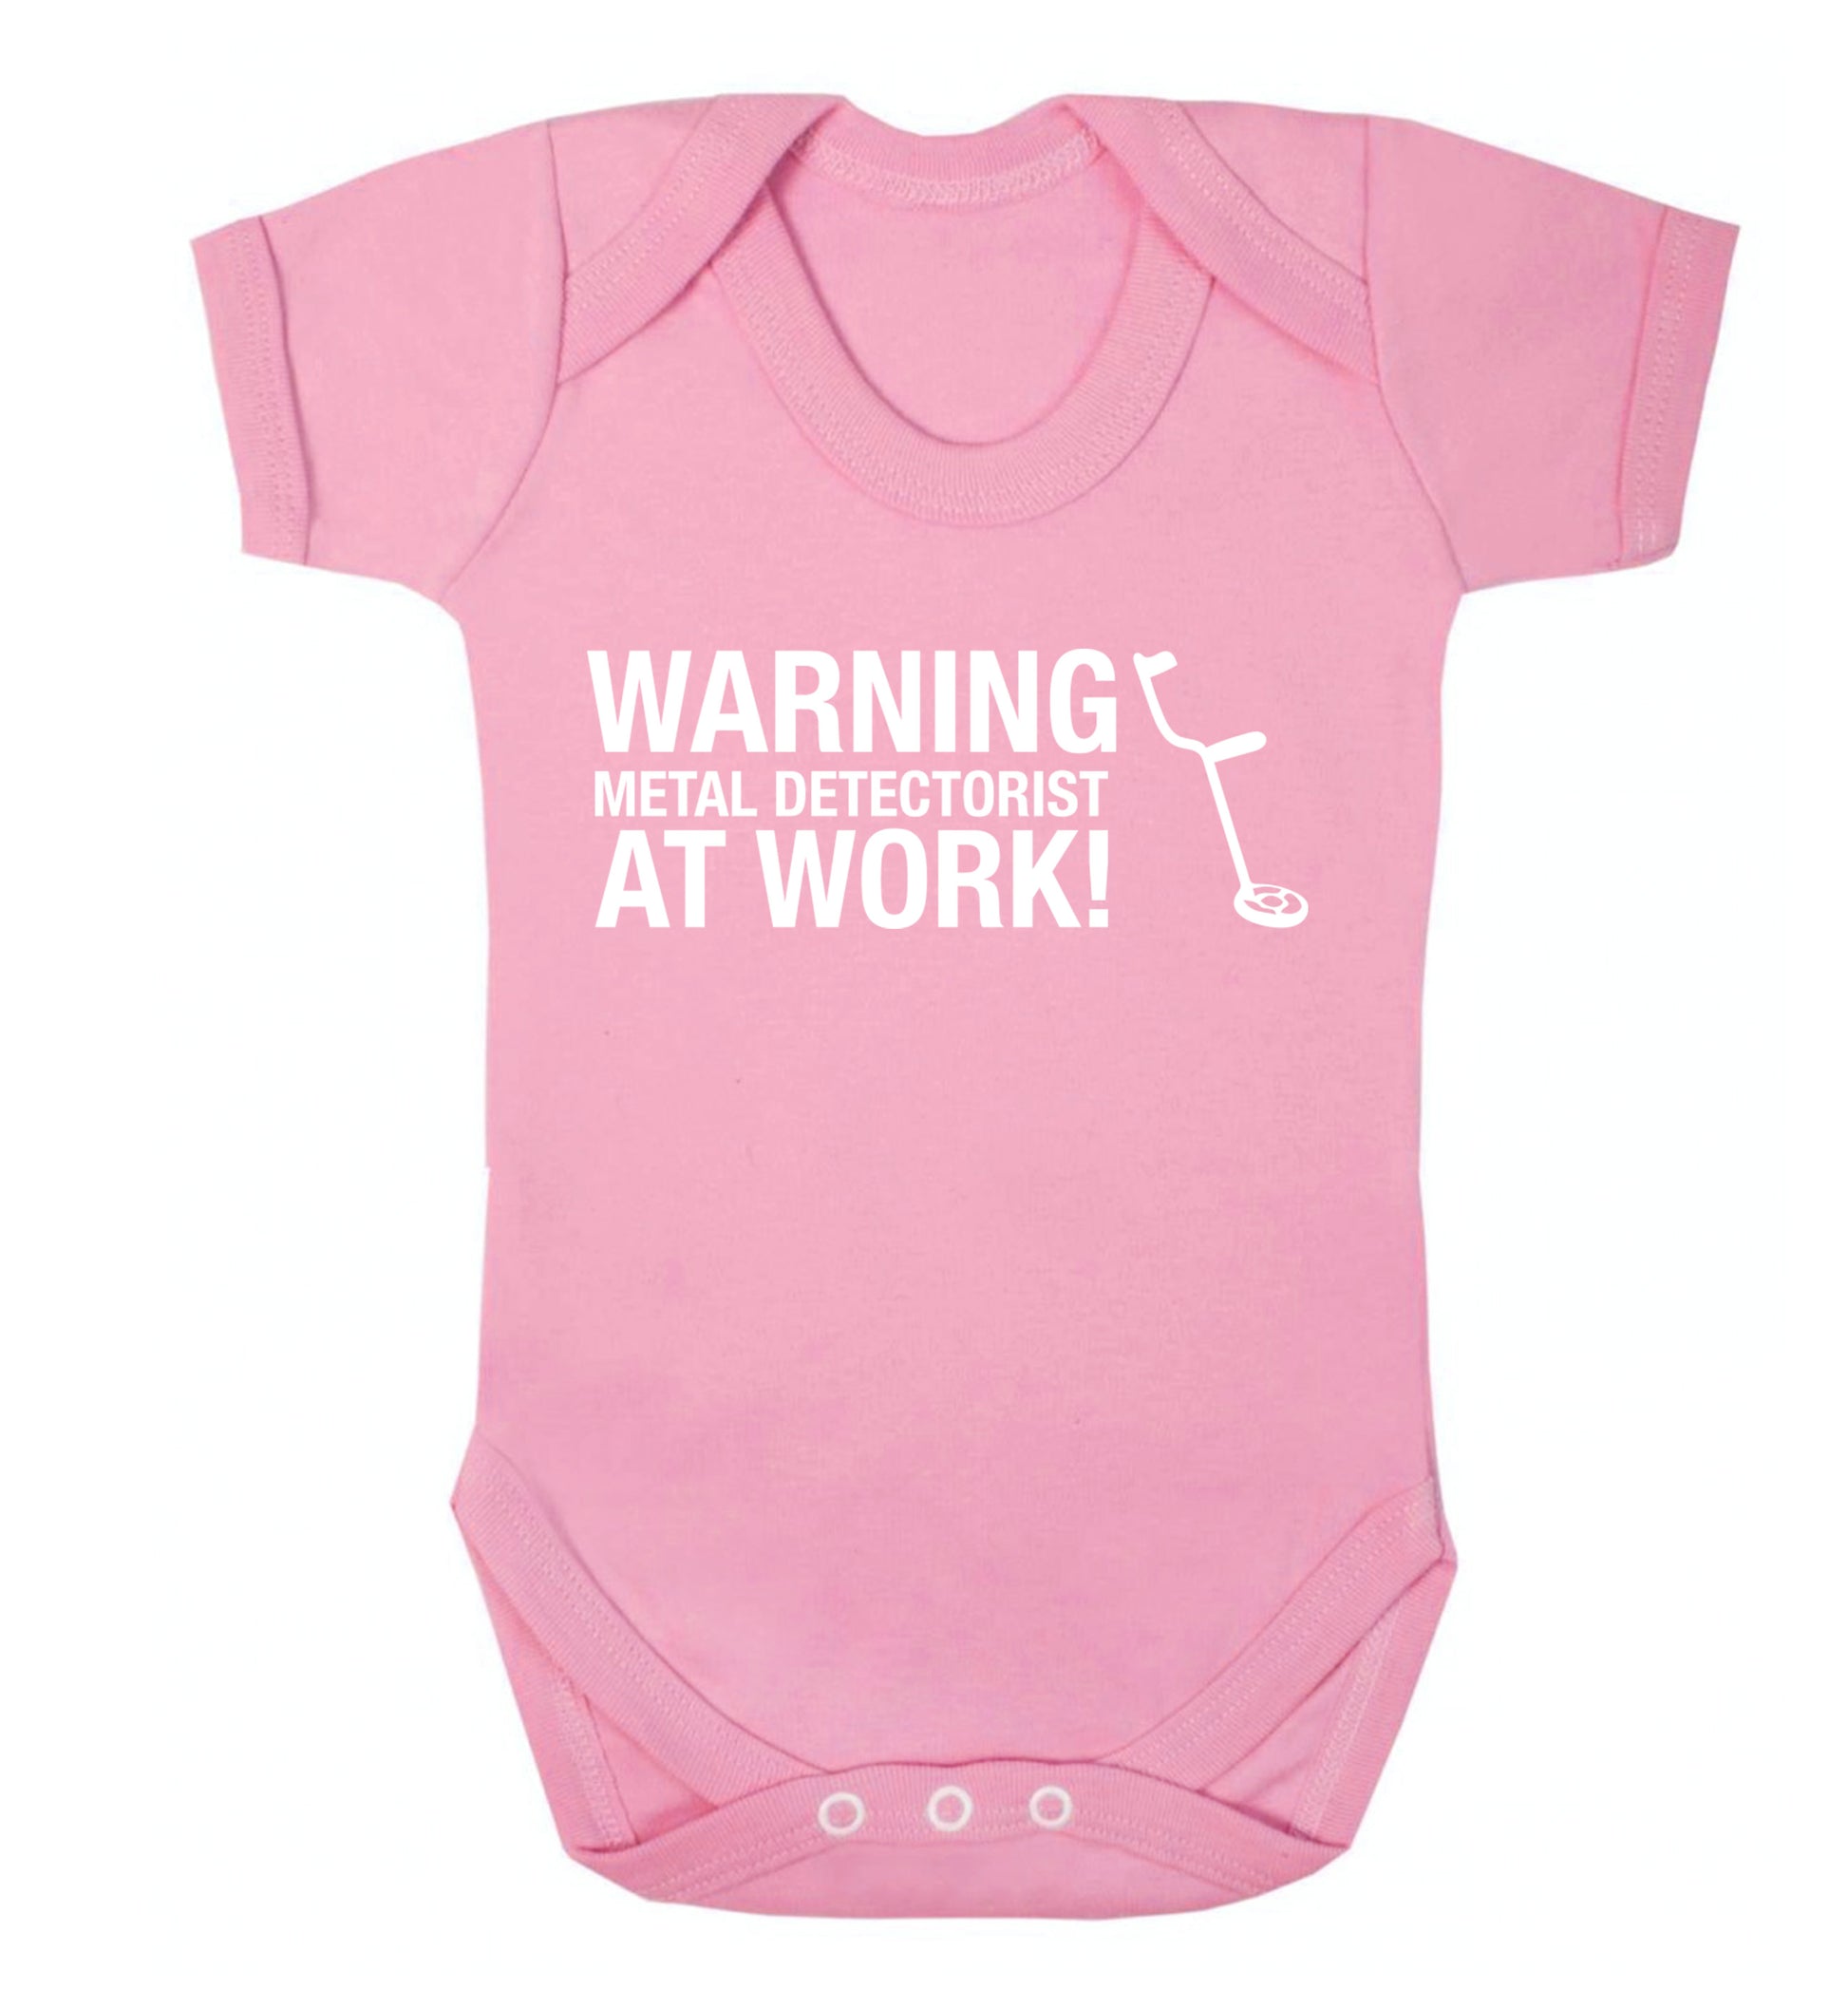 Warning metal detectorist at work! Baby Vest pale pink 18-24 months